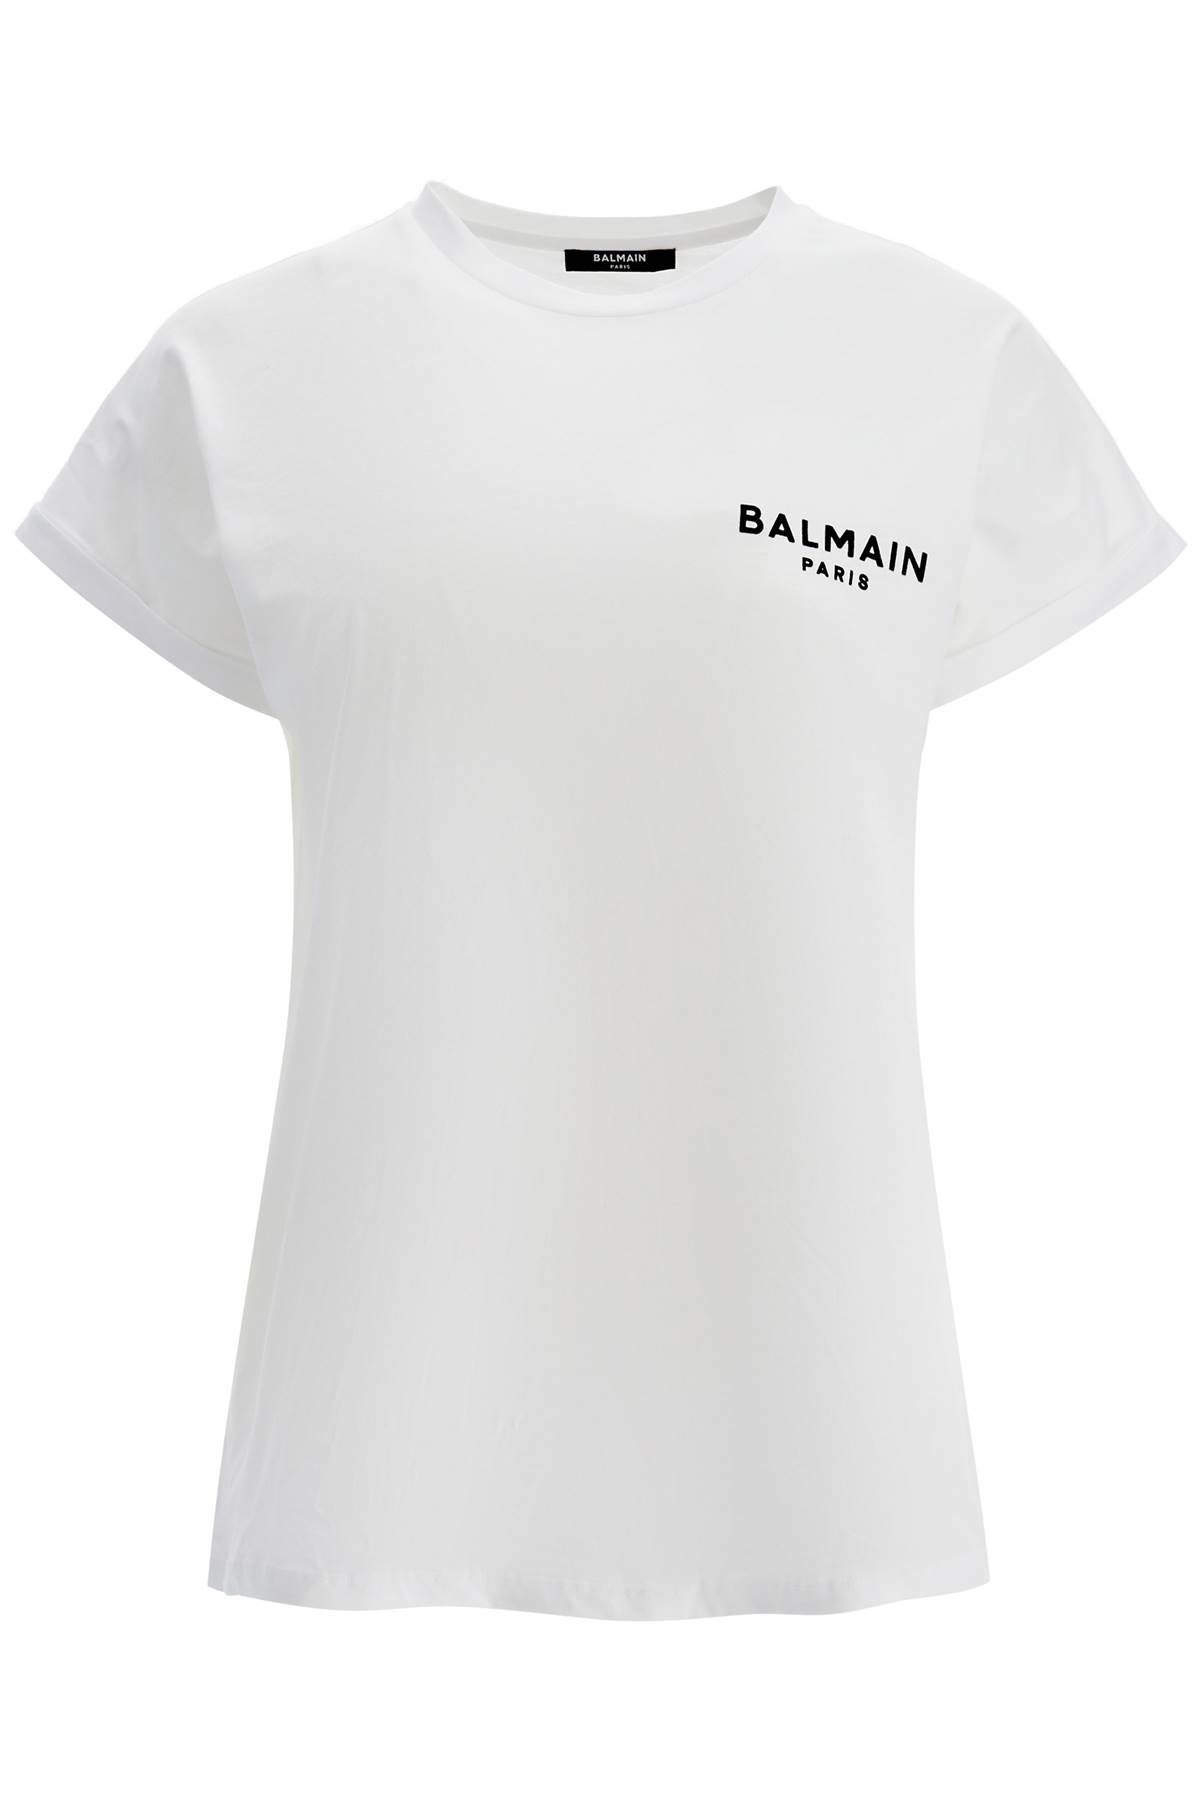 Balmain BALMAIN flocked logo t-shirt